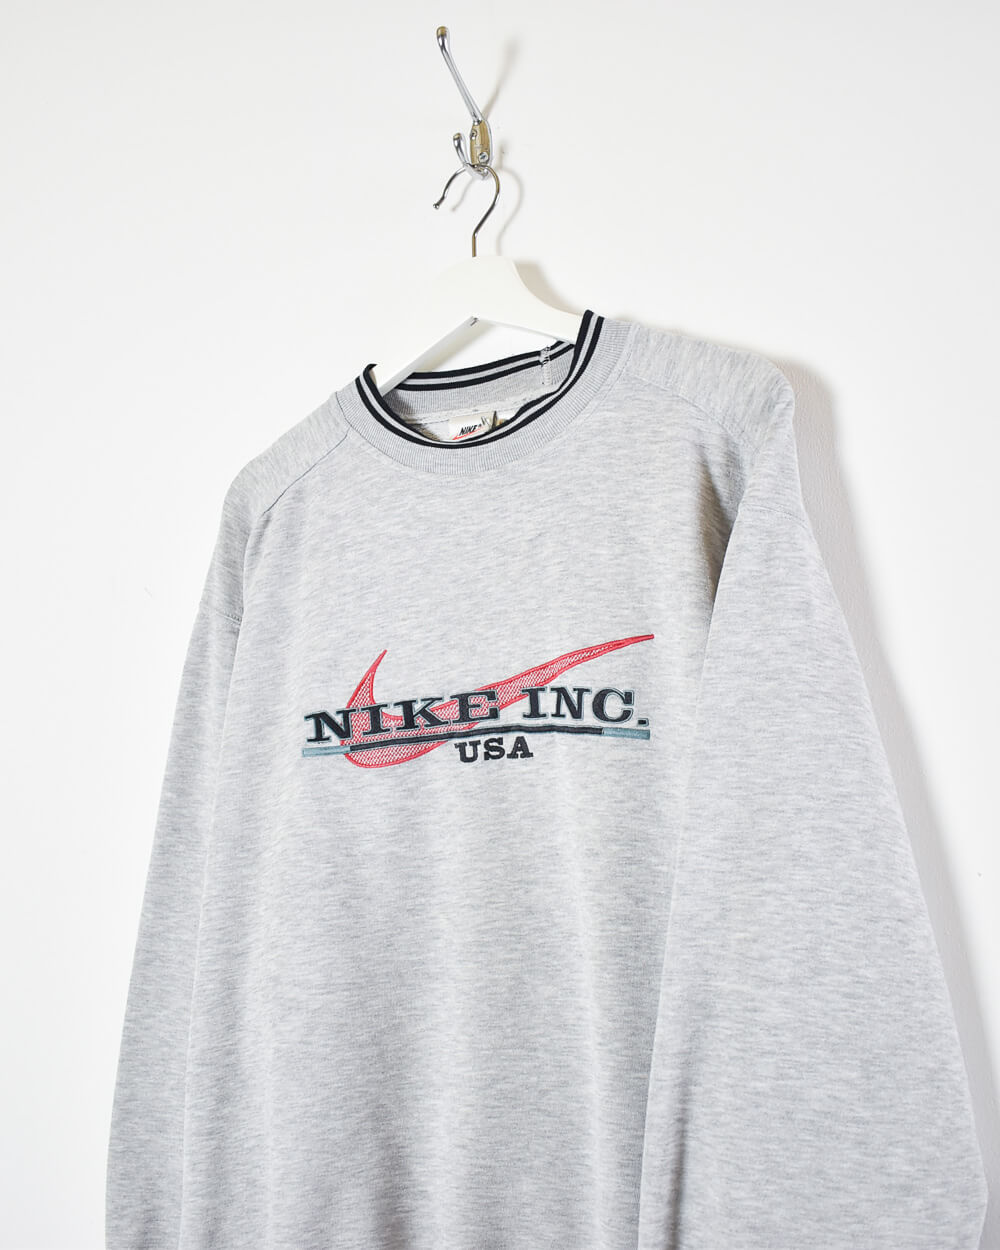 Stone Nike Inc USA Sweatshirt - Medium